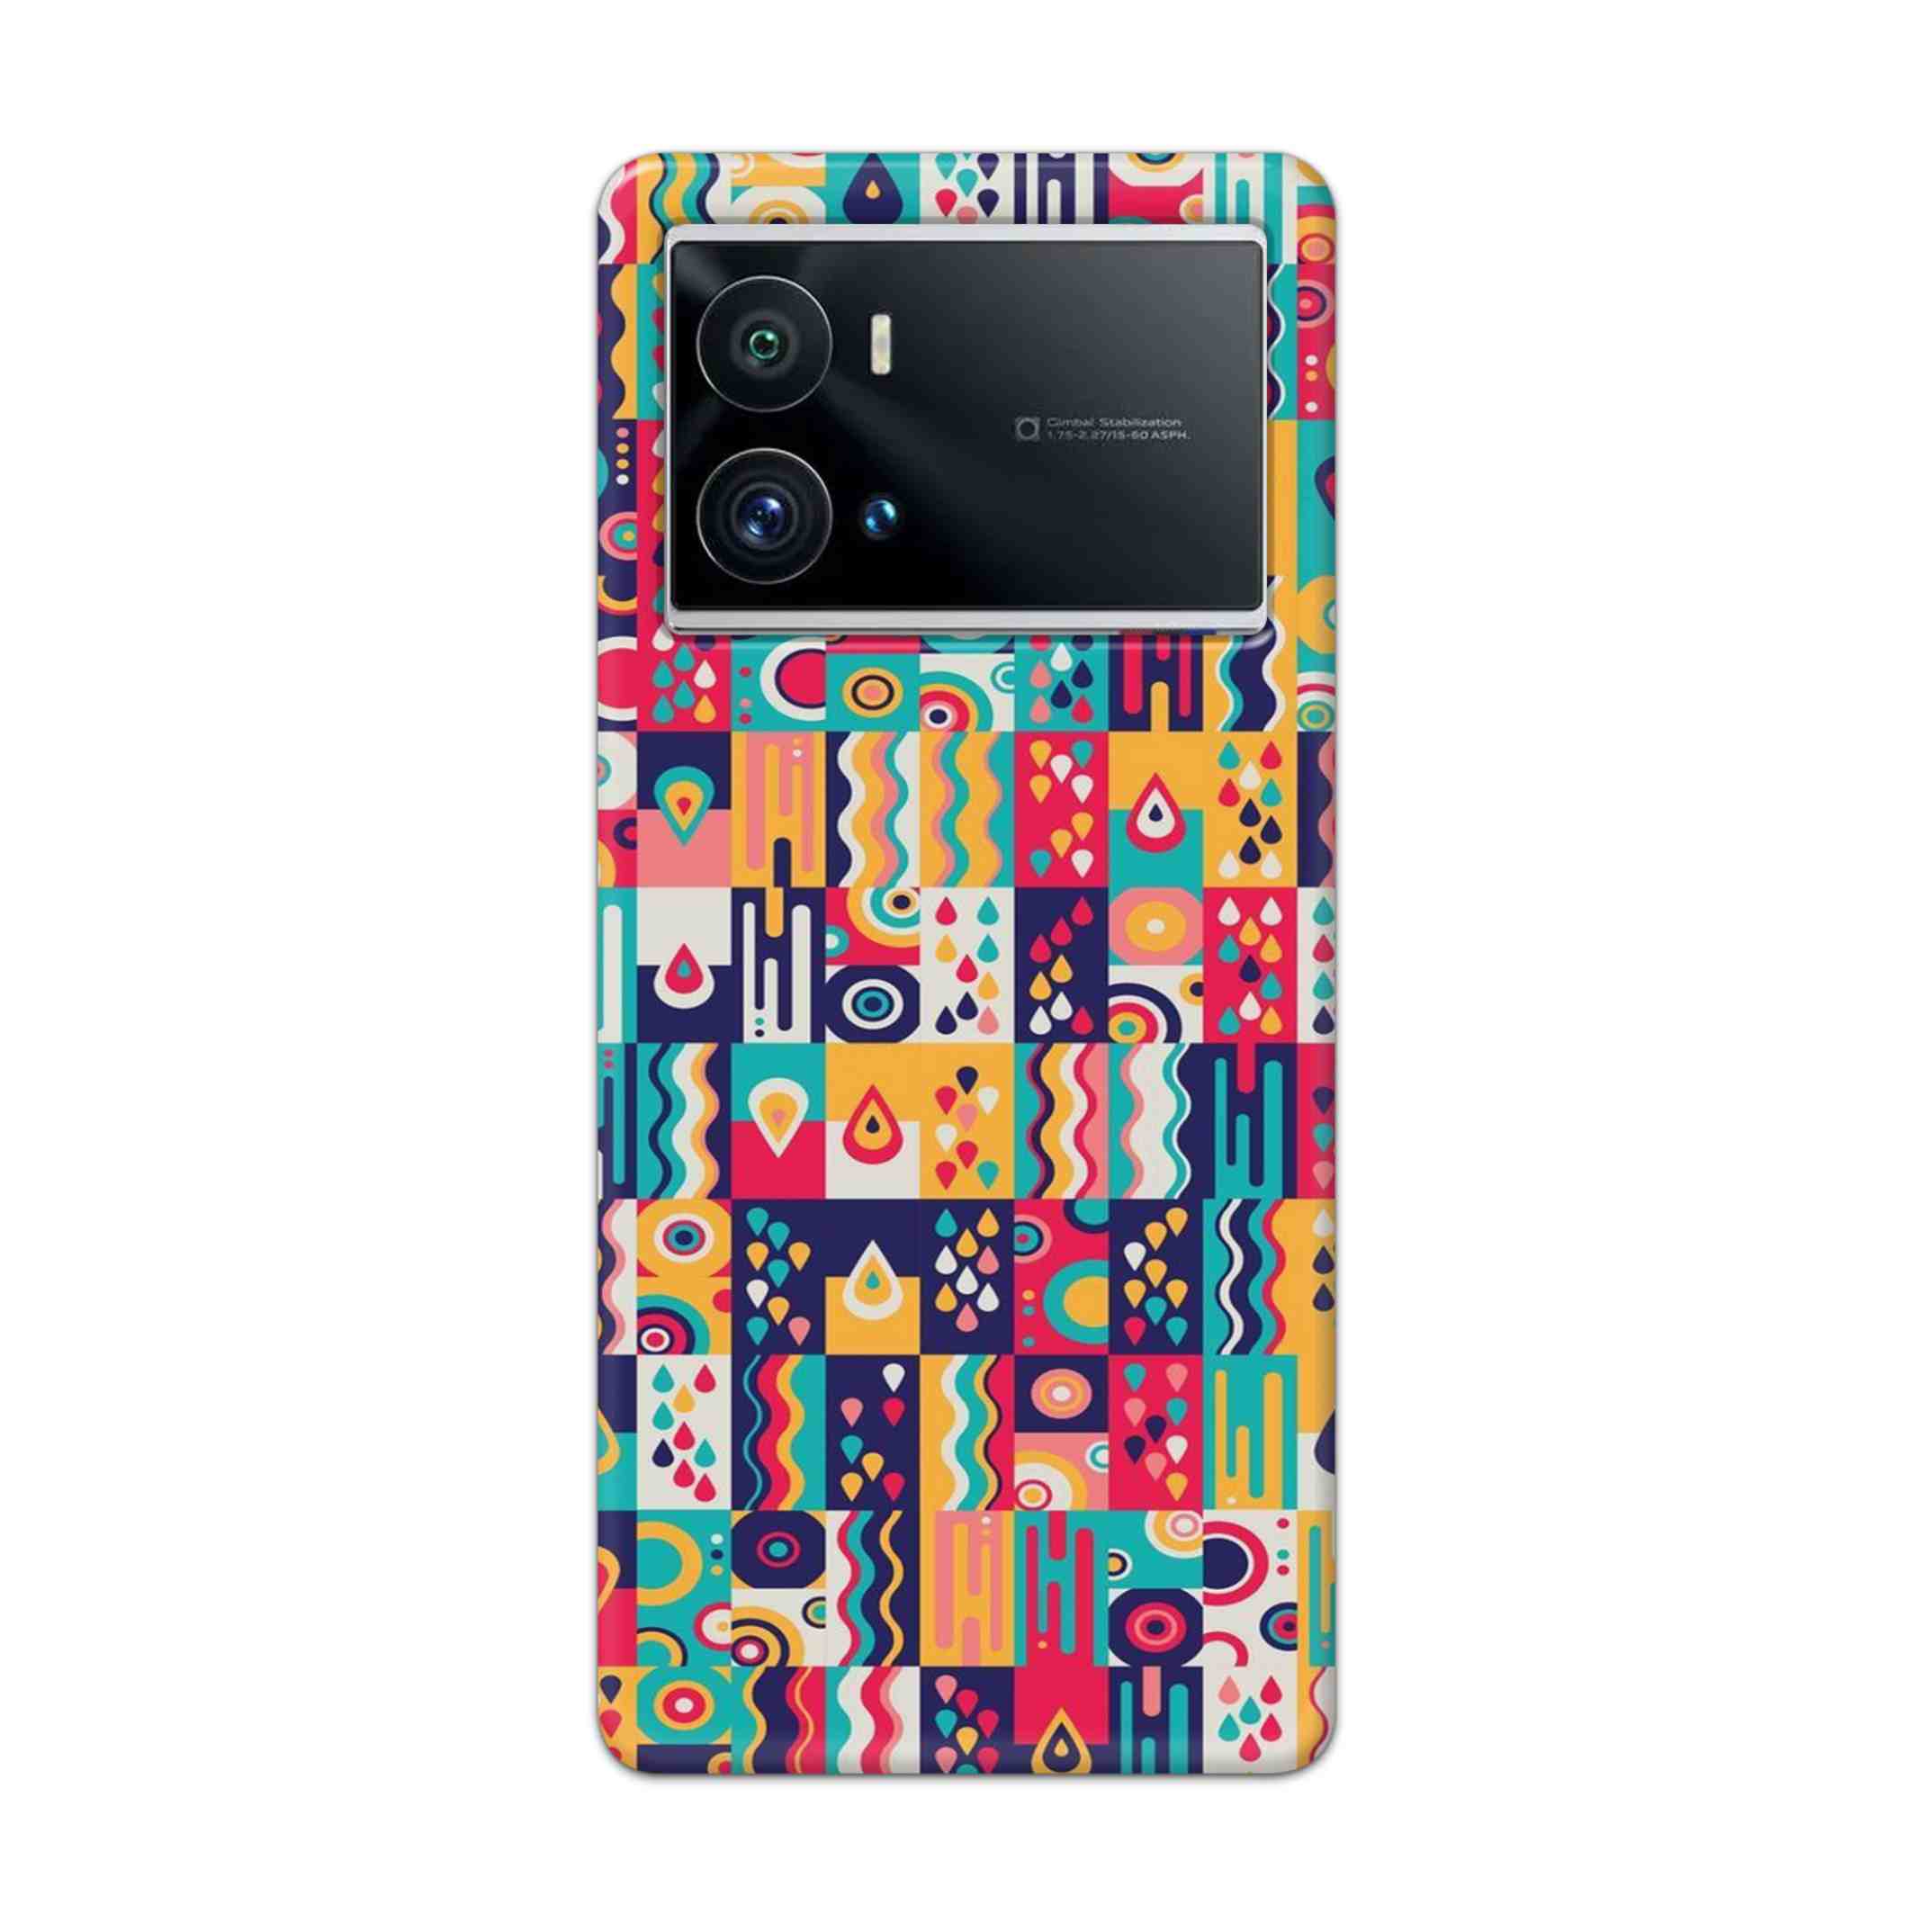 Buy Art Hard Back Mobile Phone Case Cover For iQOO 9 Pro 5G Online